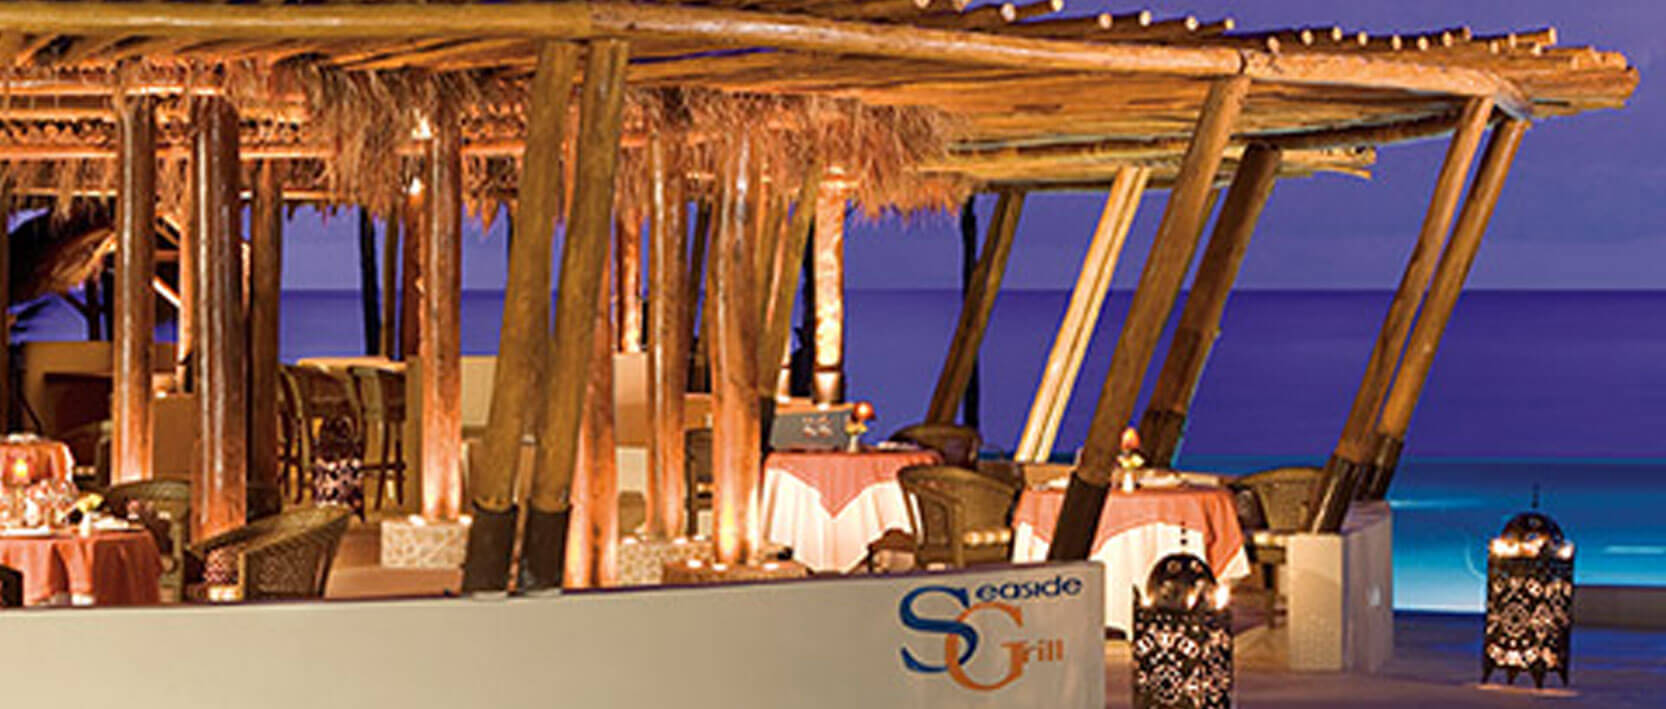 Dreams Riviera Cancun Resort Restaurants and Bars - Seaside Grill